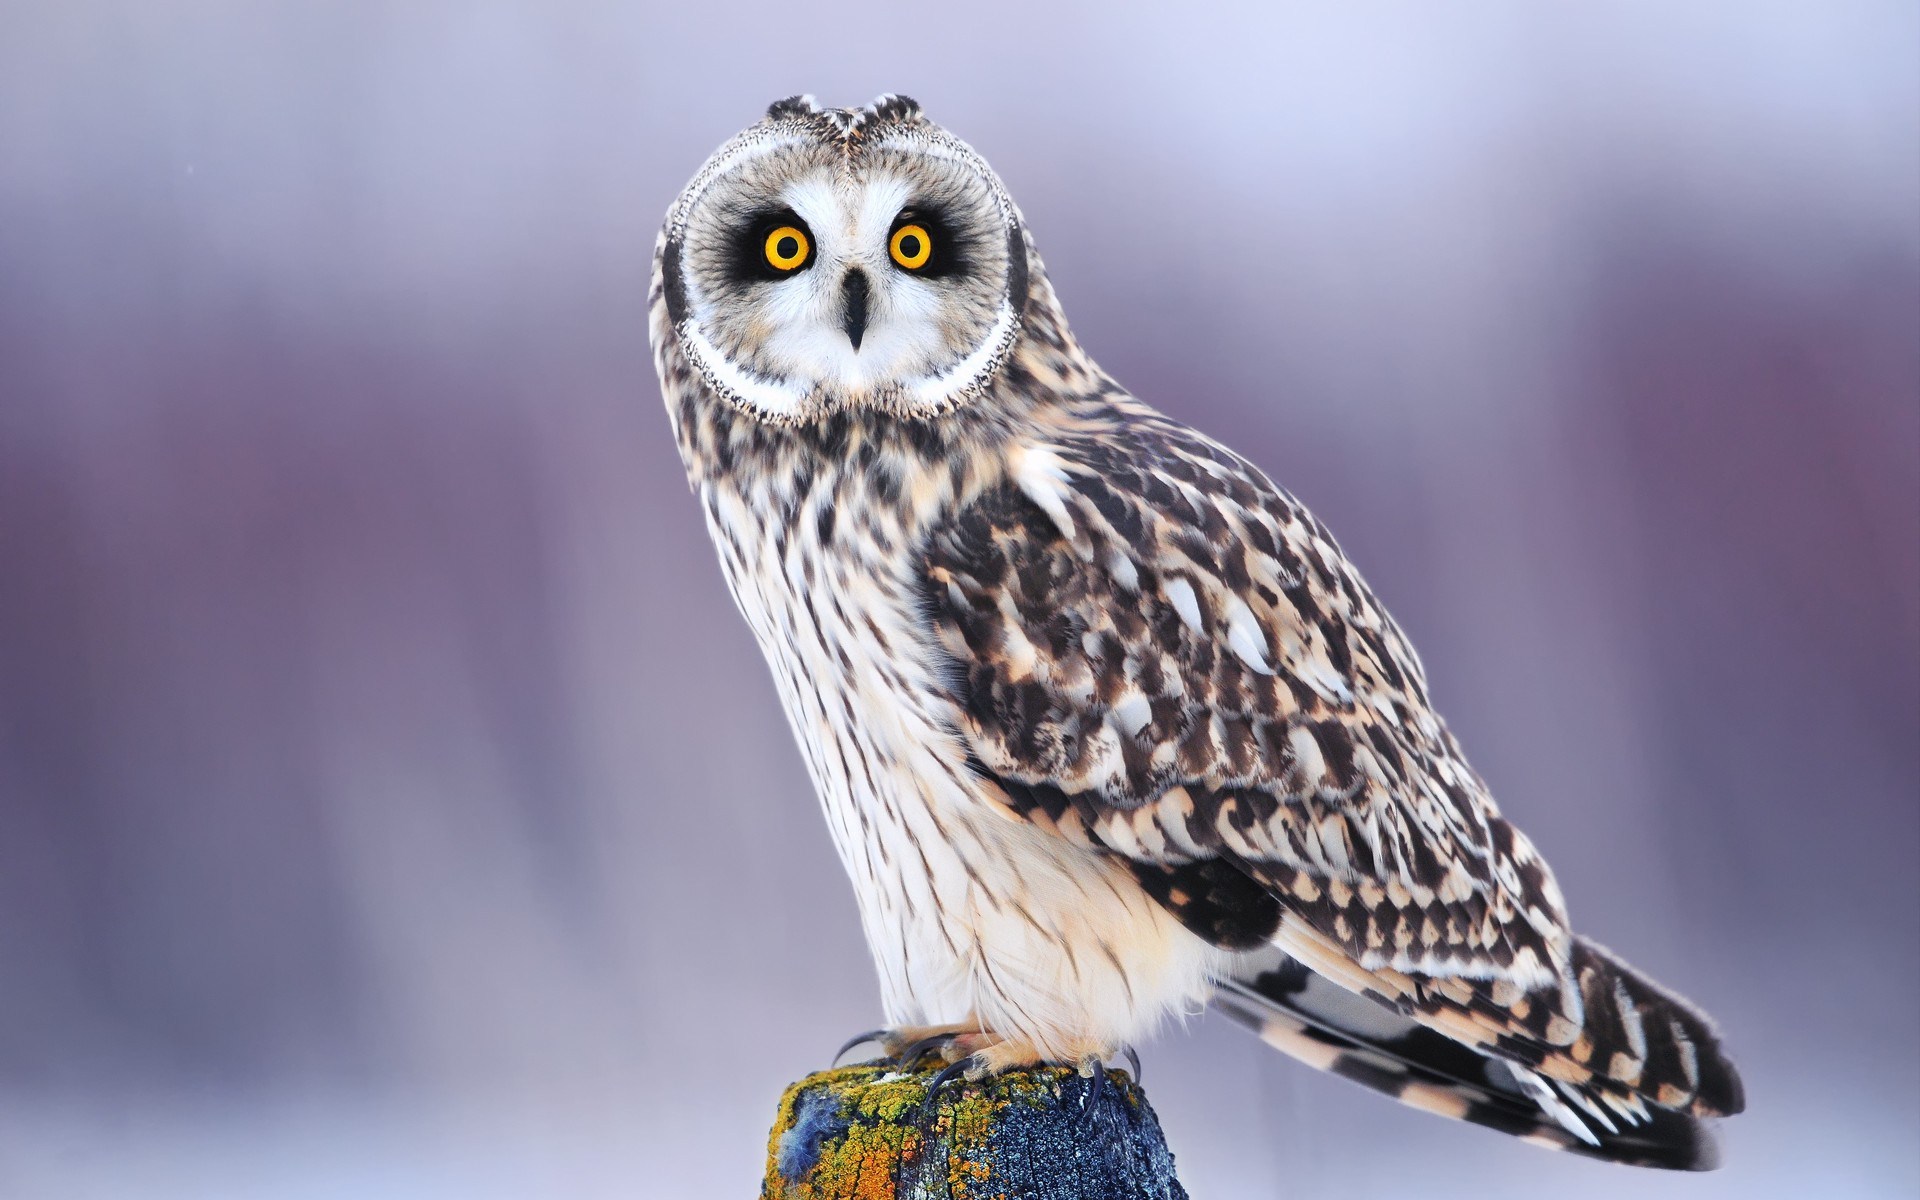 Hd Image Of Owl - HD Wallpaper 